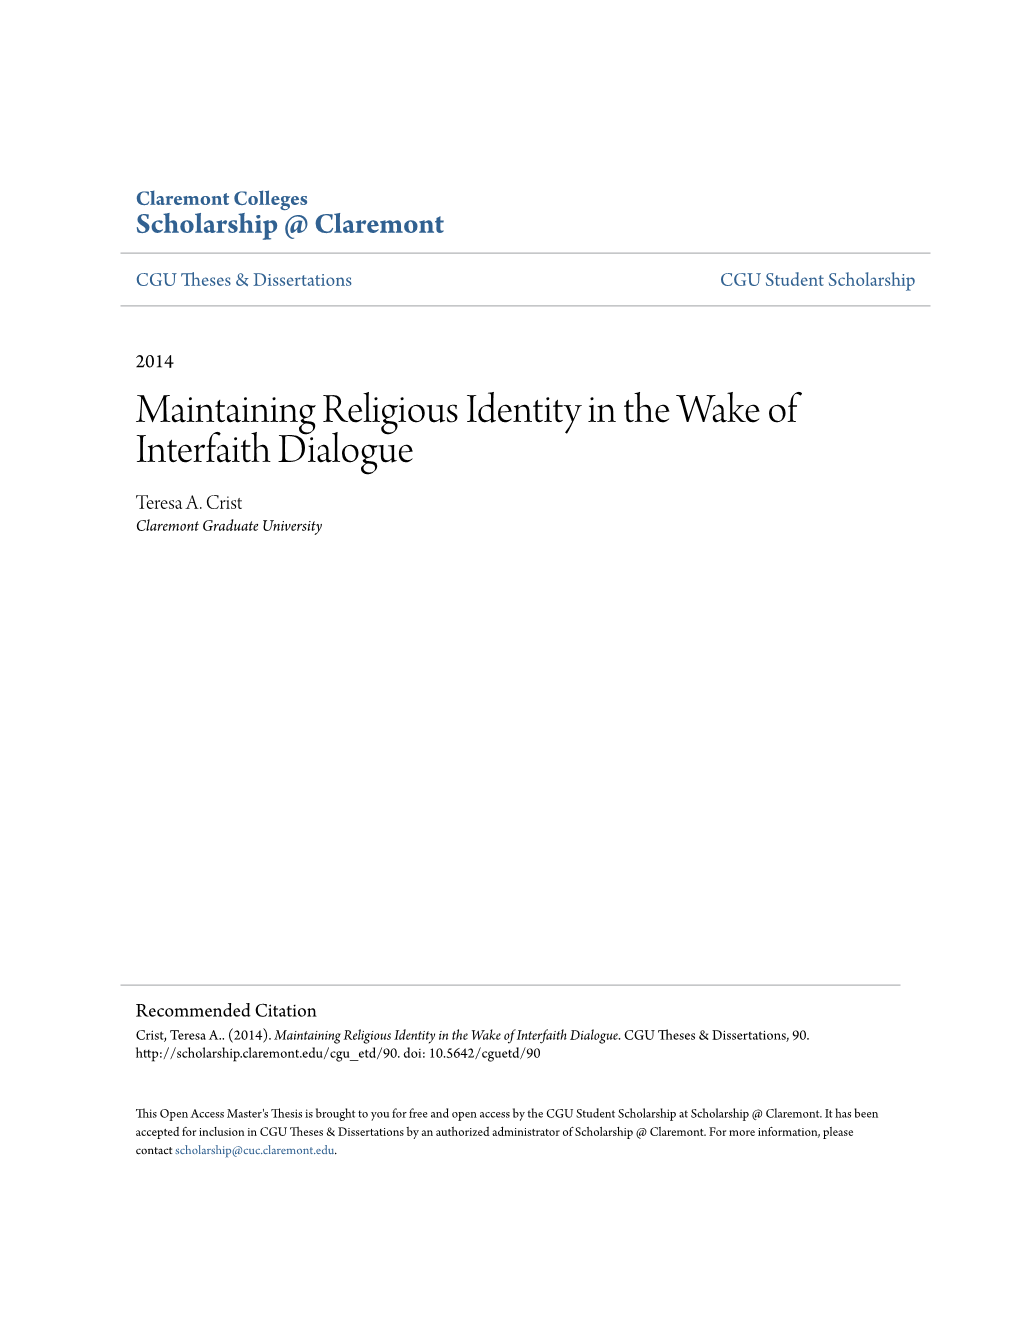 Maintaining Religious Identity in the Wake of Interfaith Dialogue Teresa A